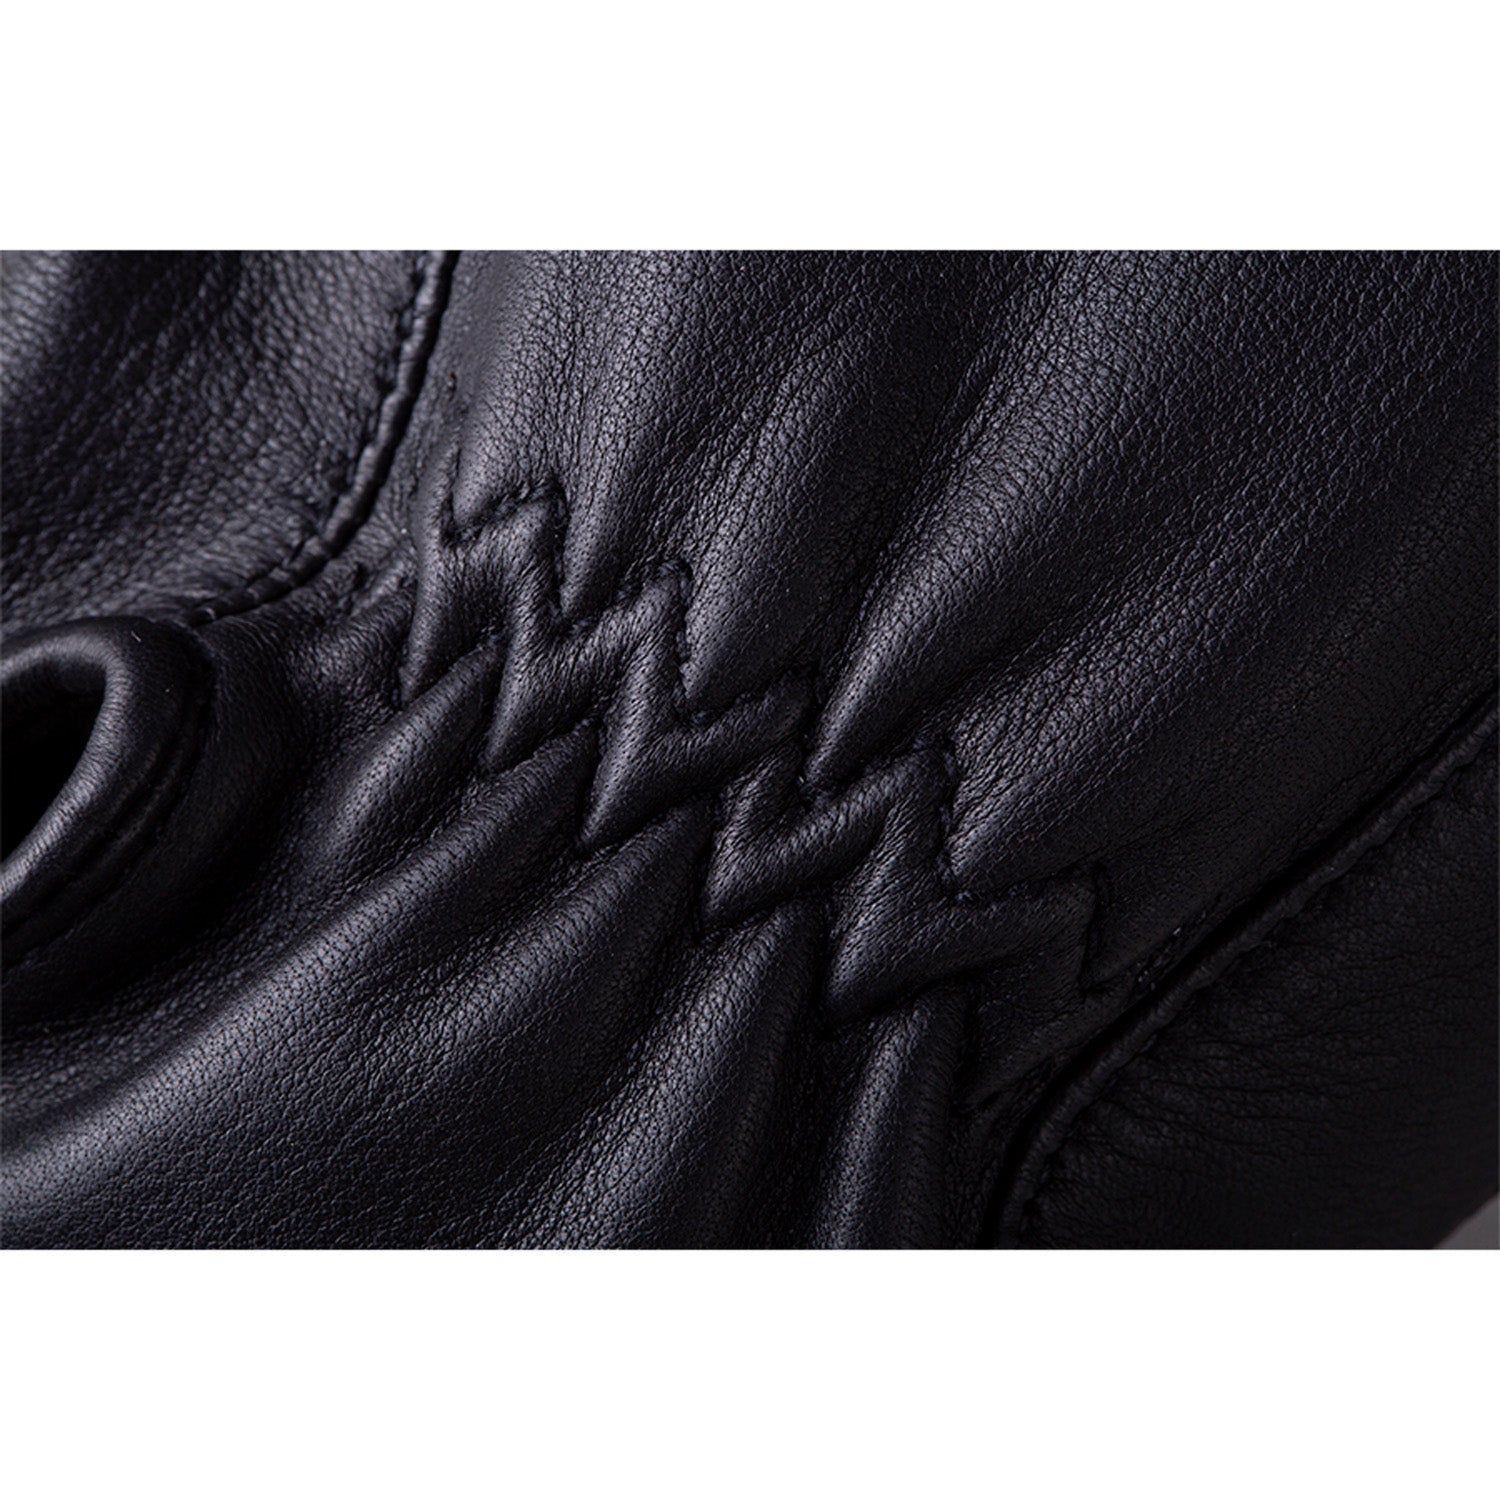 Men's Deerskin Strap Glove, Black